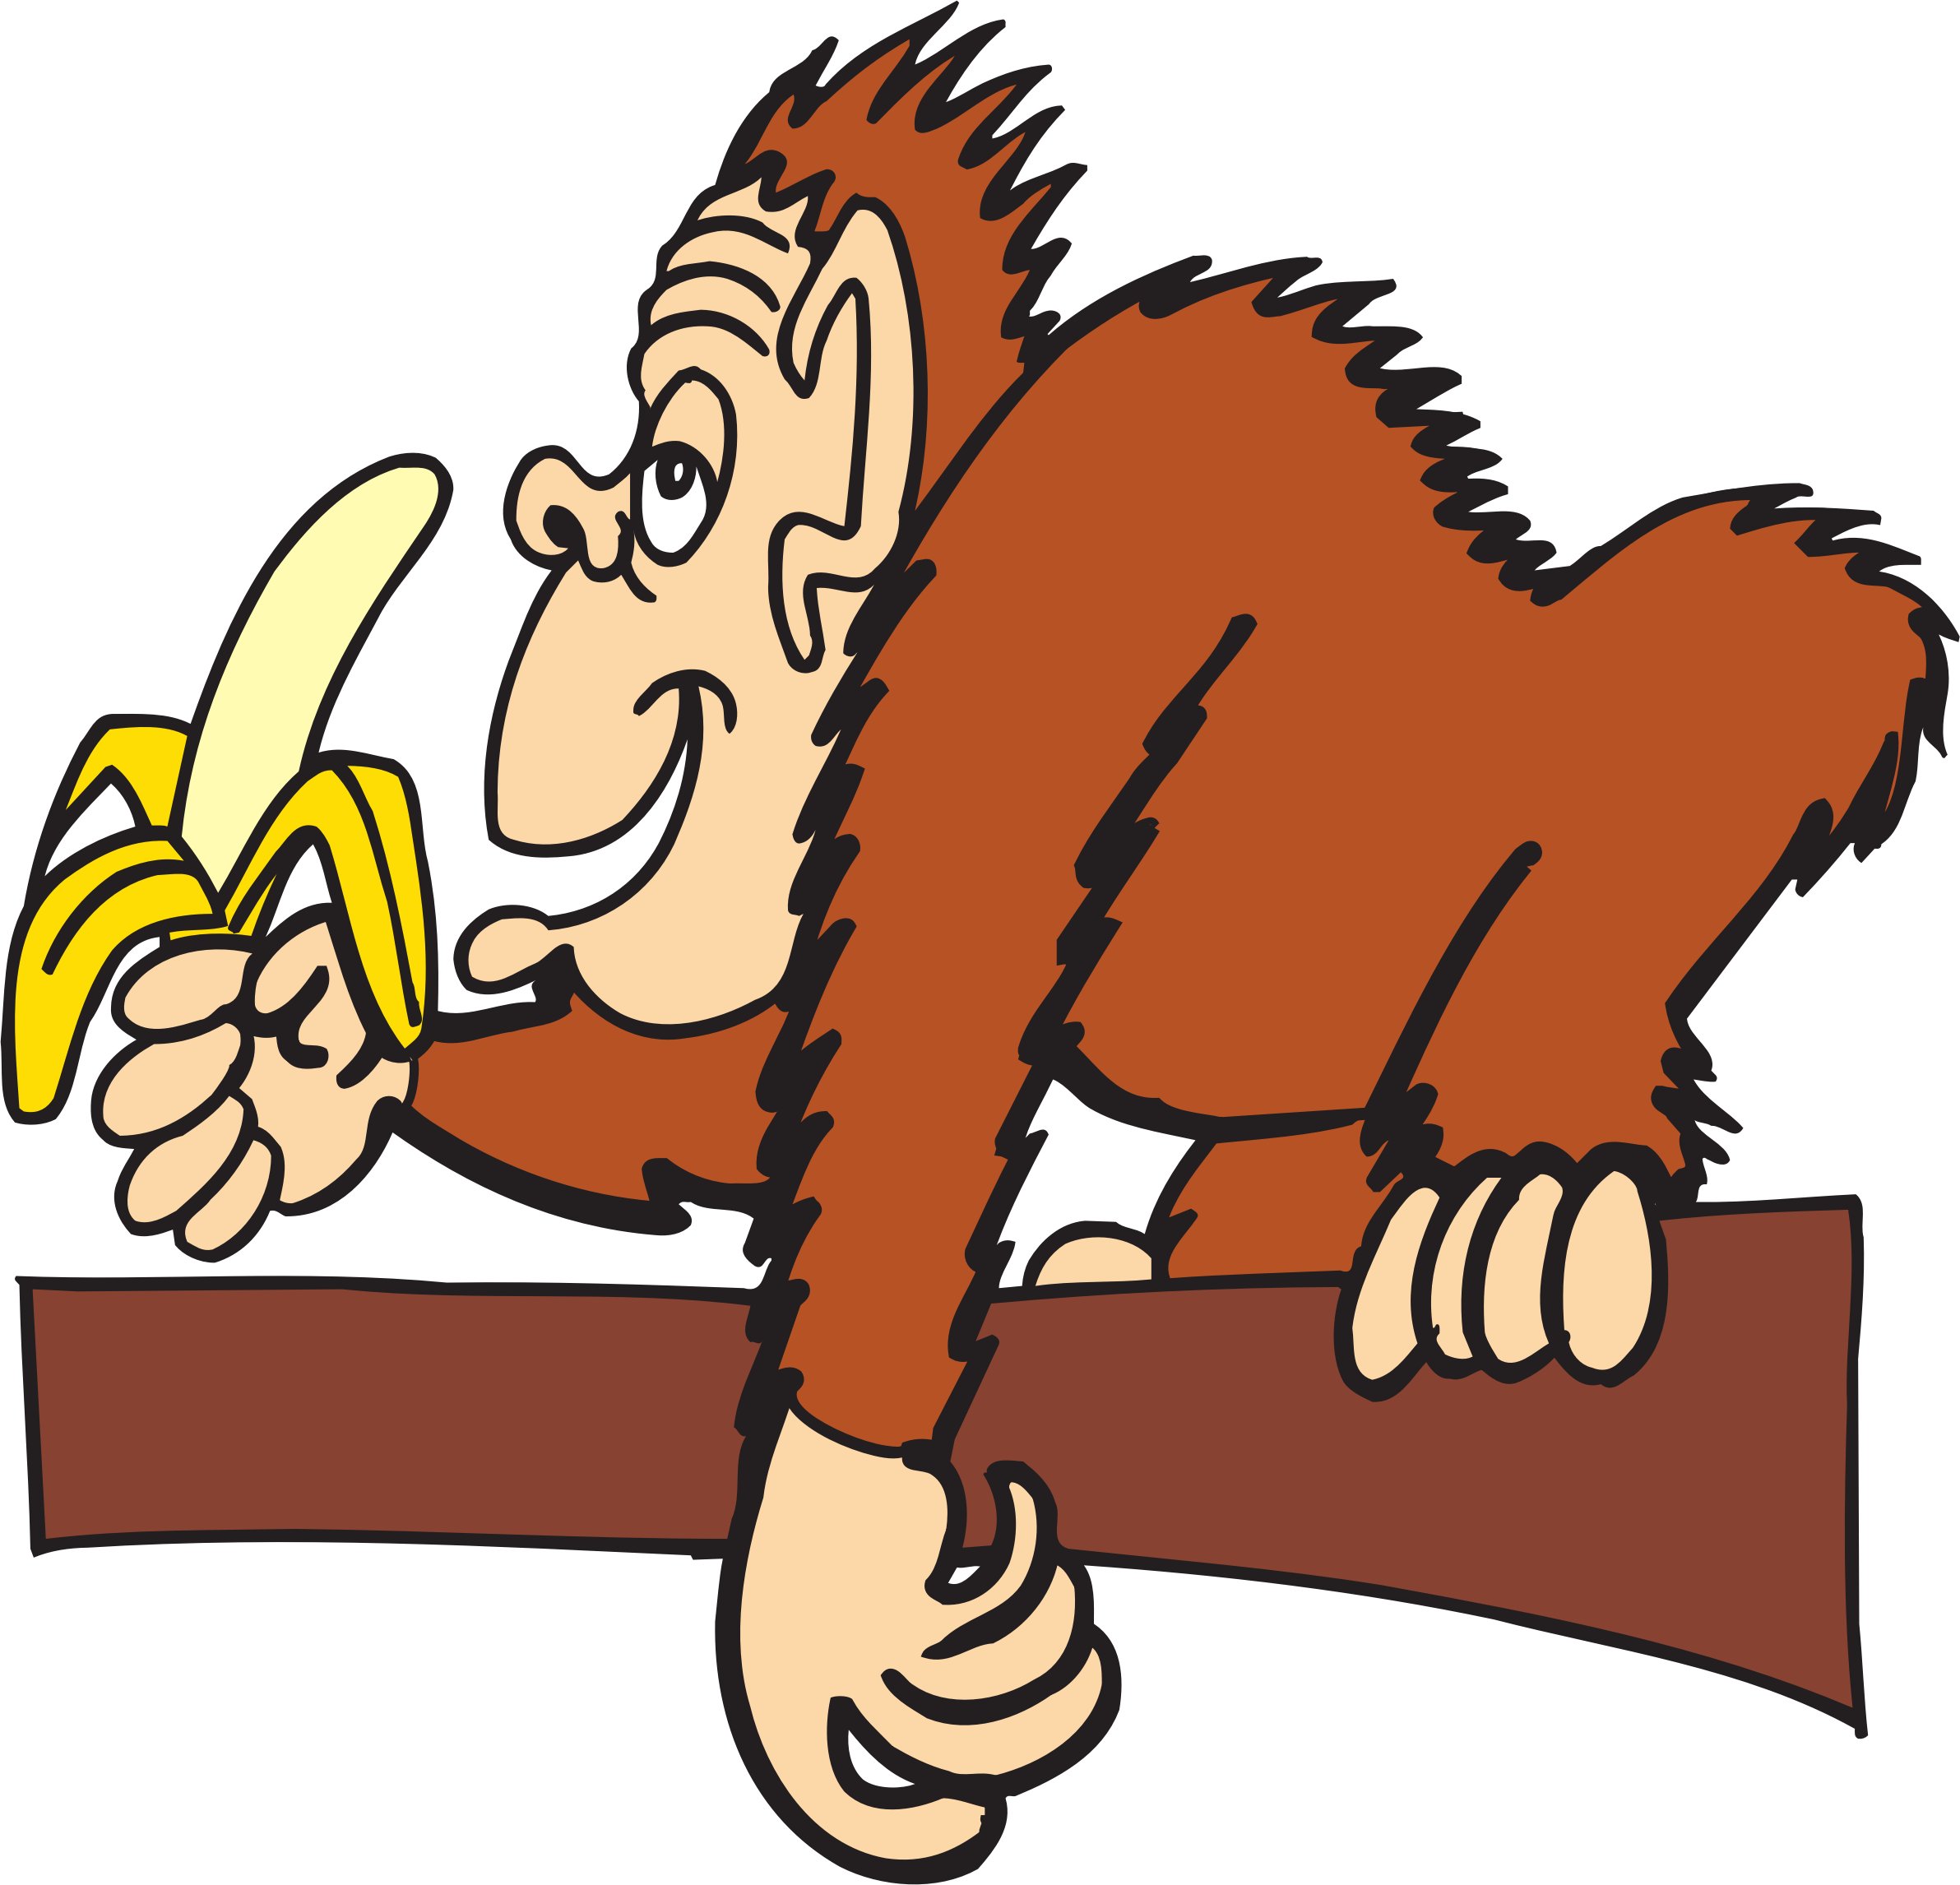 A Cartoon Of A Monkey Eating A Banana